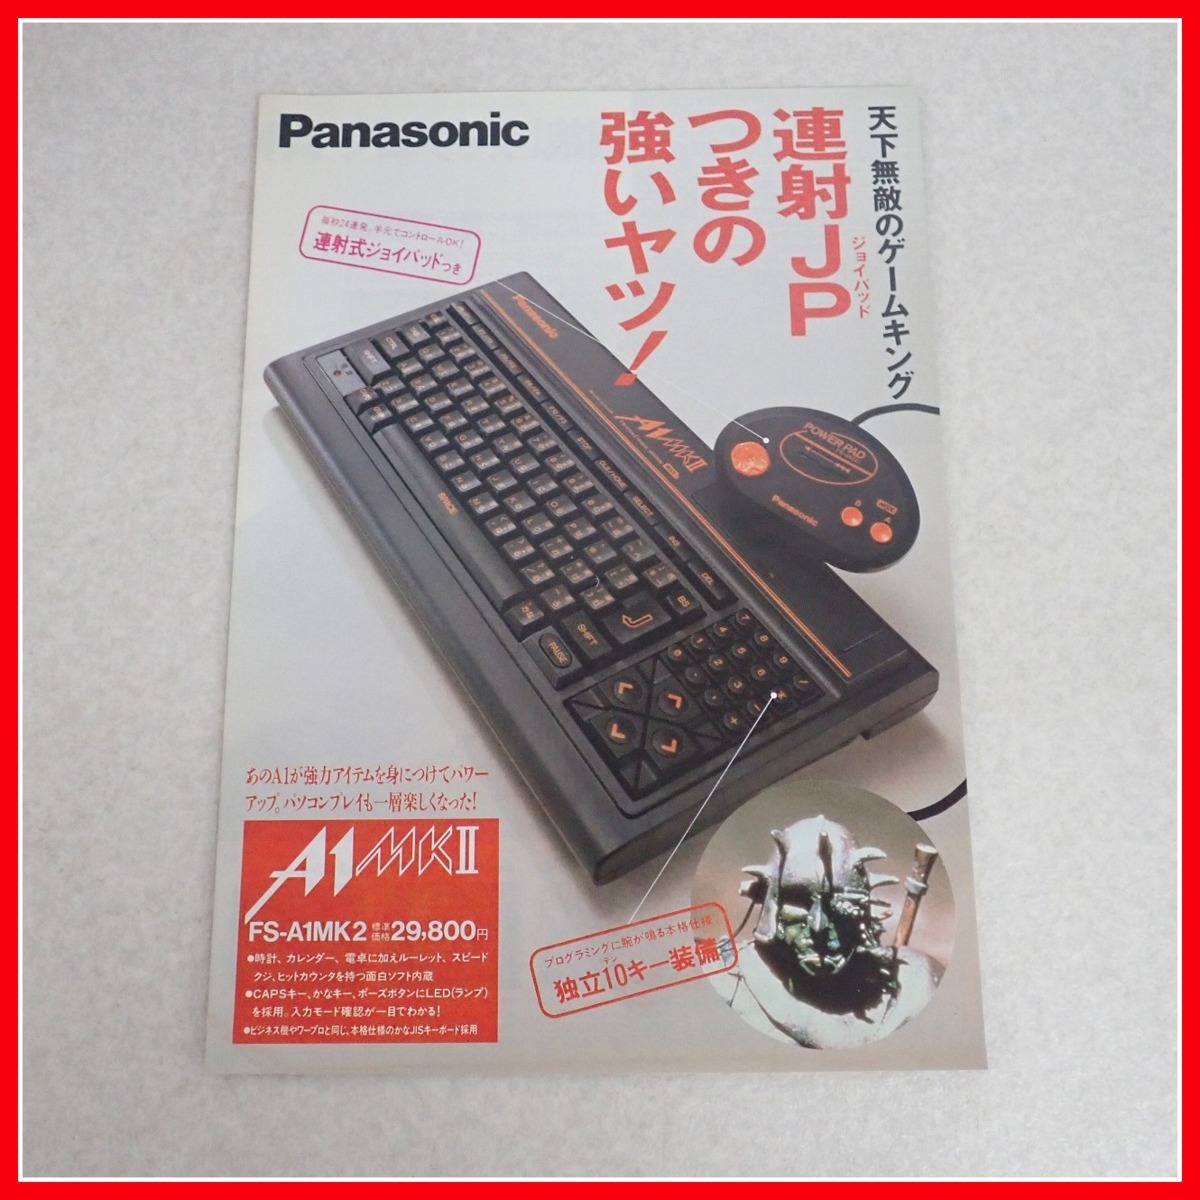 ◇Panasonic MSX2 FS-A1MK2 商品カタログ 3枚セット レトロPC パナソニック 松下電器【10_画像2